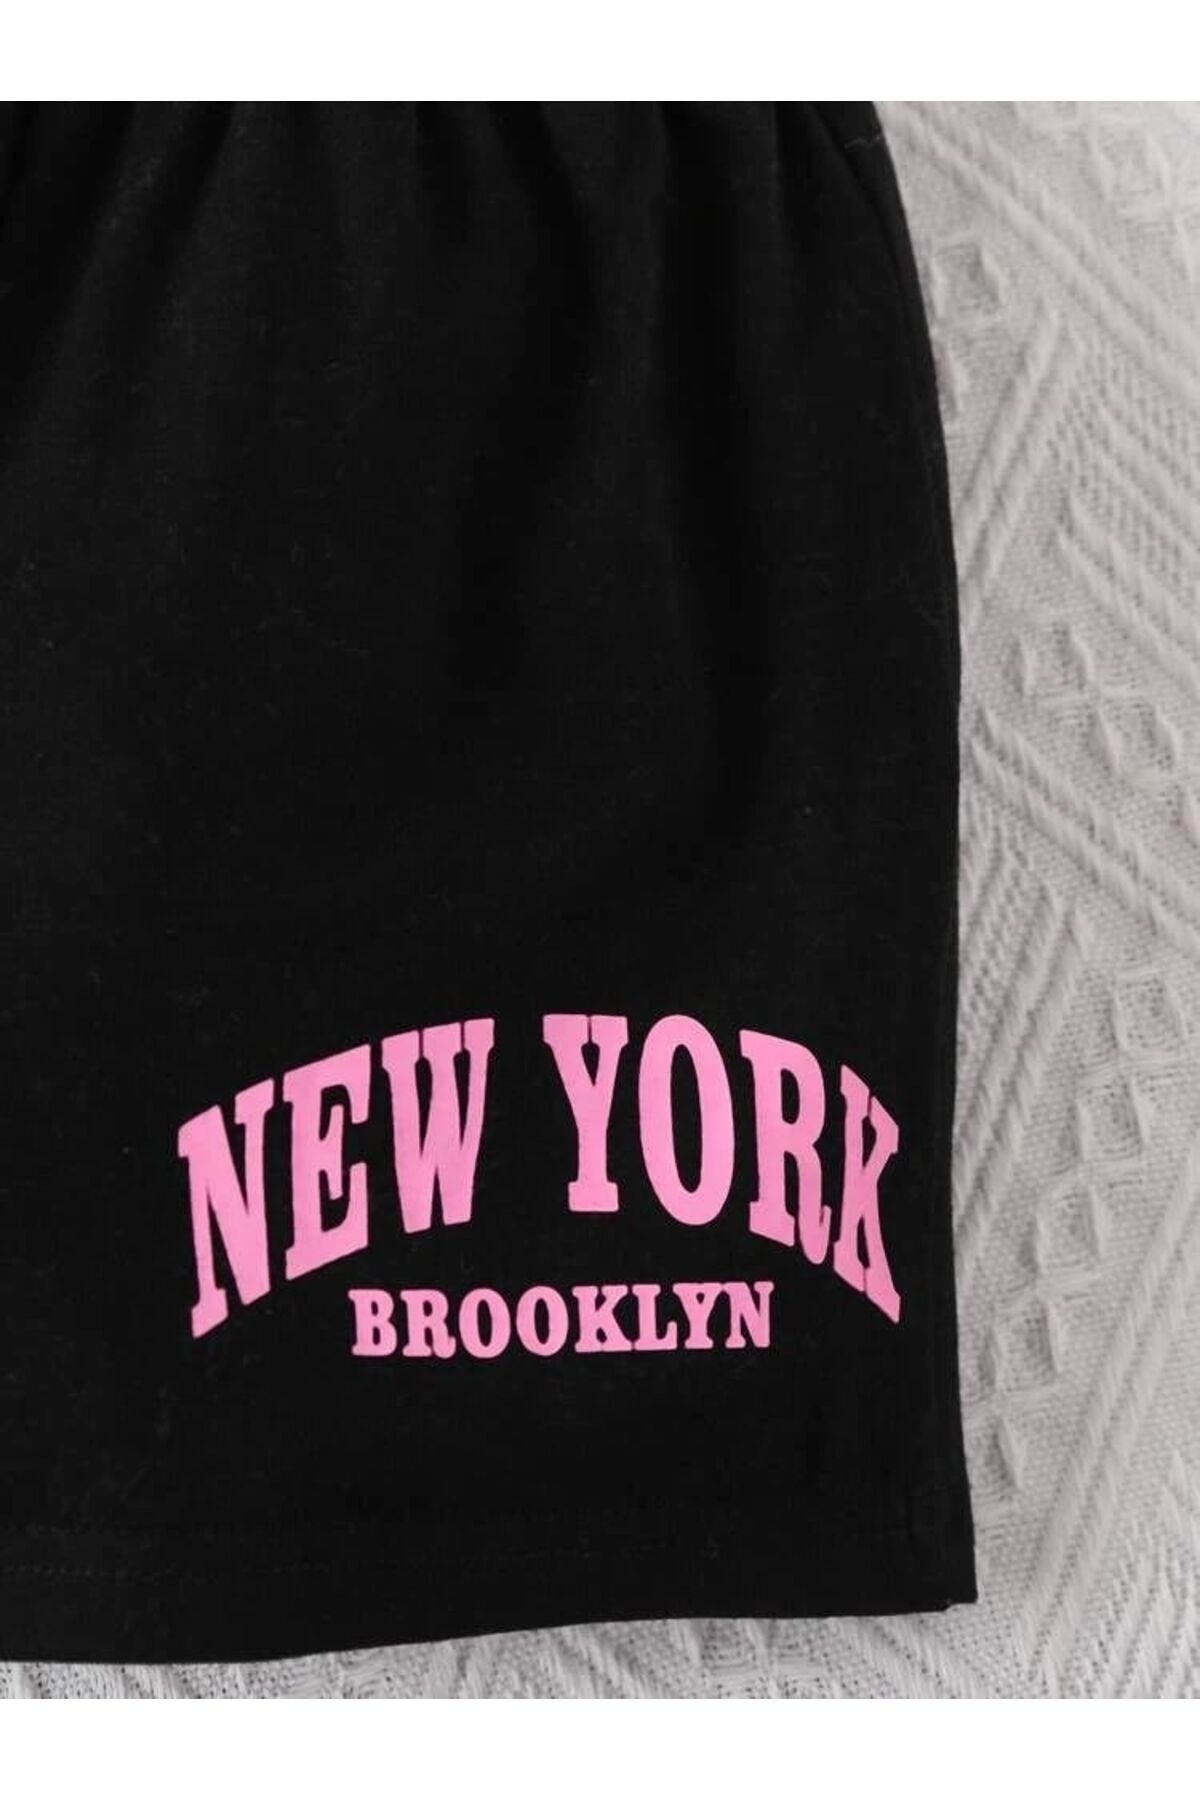 New York Printed Black Top Girls Shorts Set